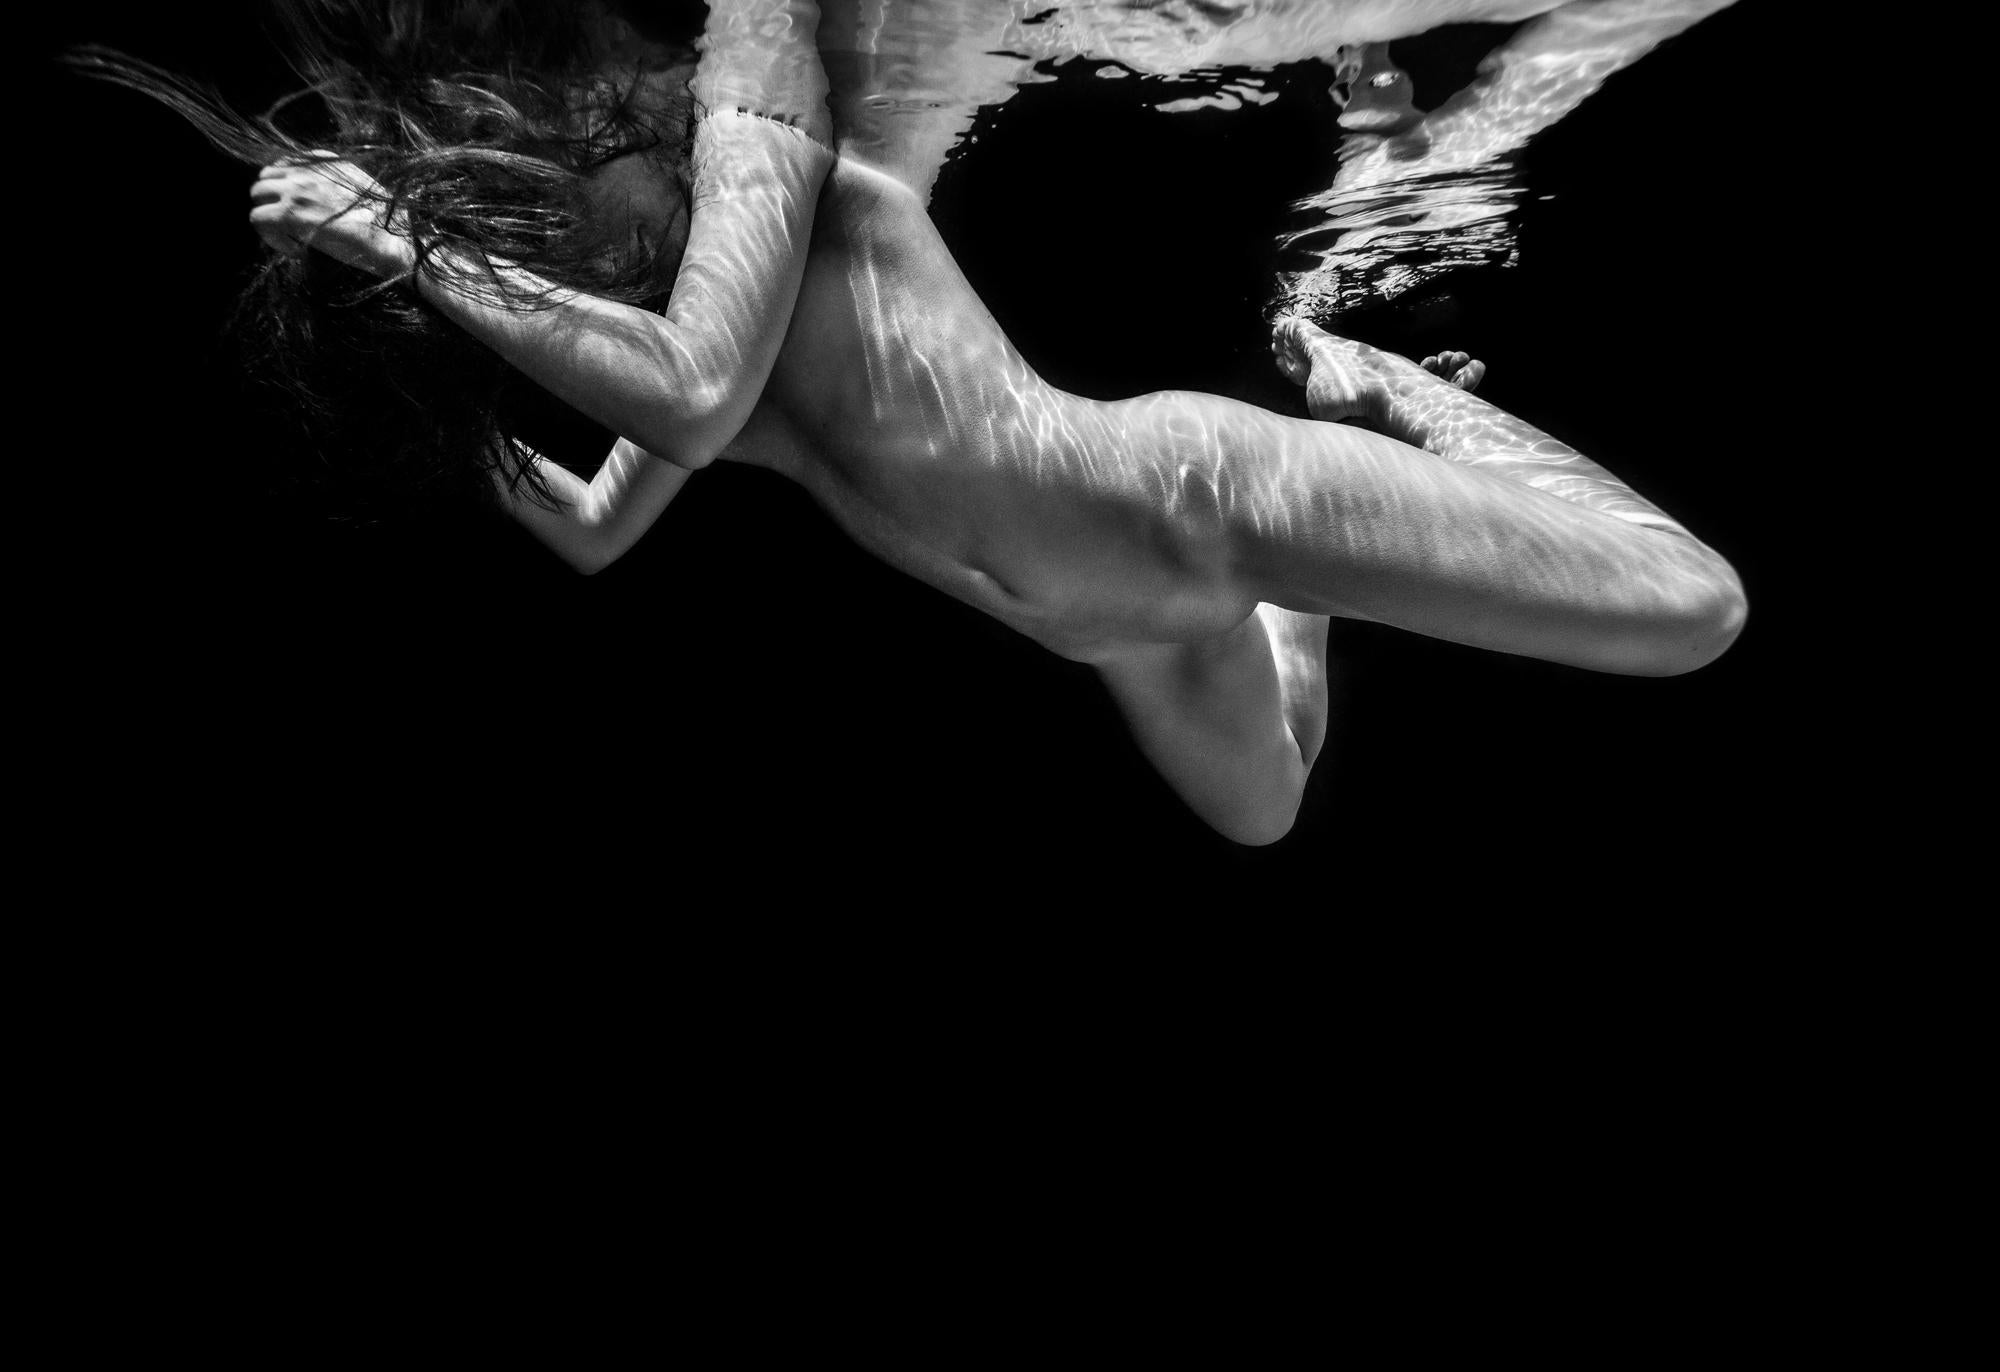 Alex Sher Figurative Photograph - The Smile - underwater nude b&w photograph - archival pigment print 18x24"